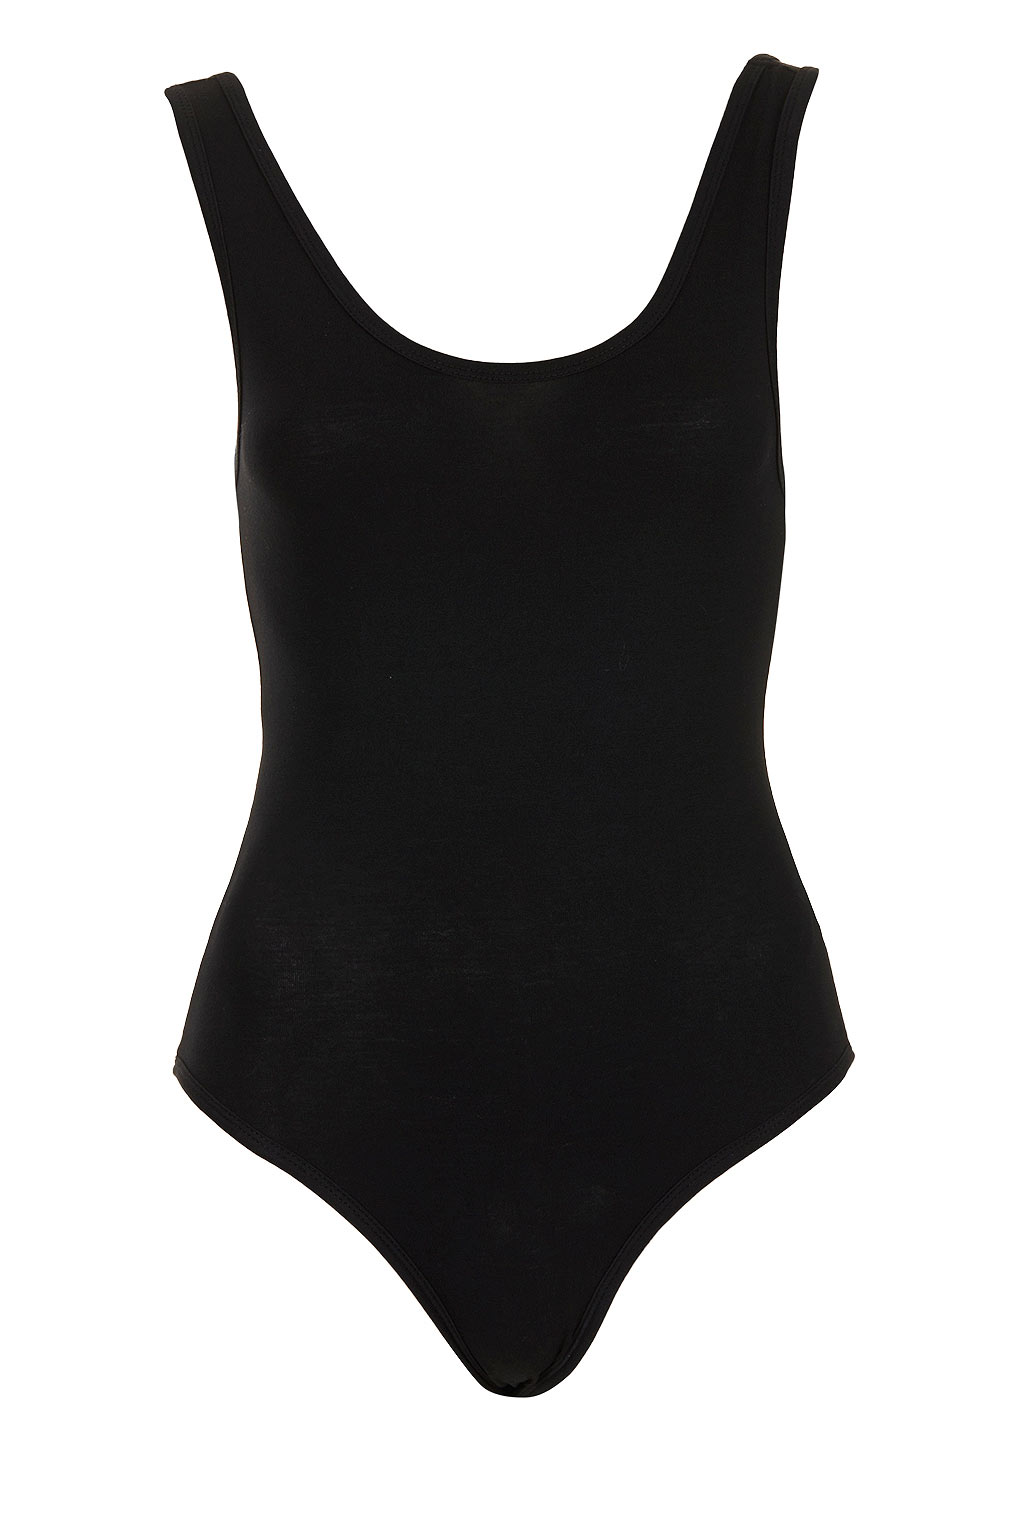 Lyst - Topshop Petite Basic Vest Body in Black